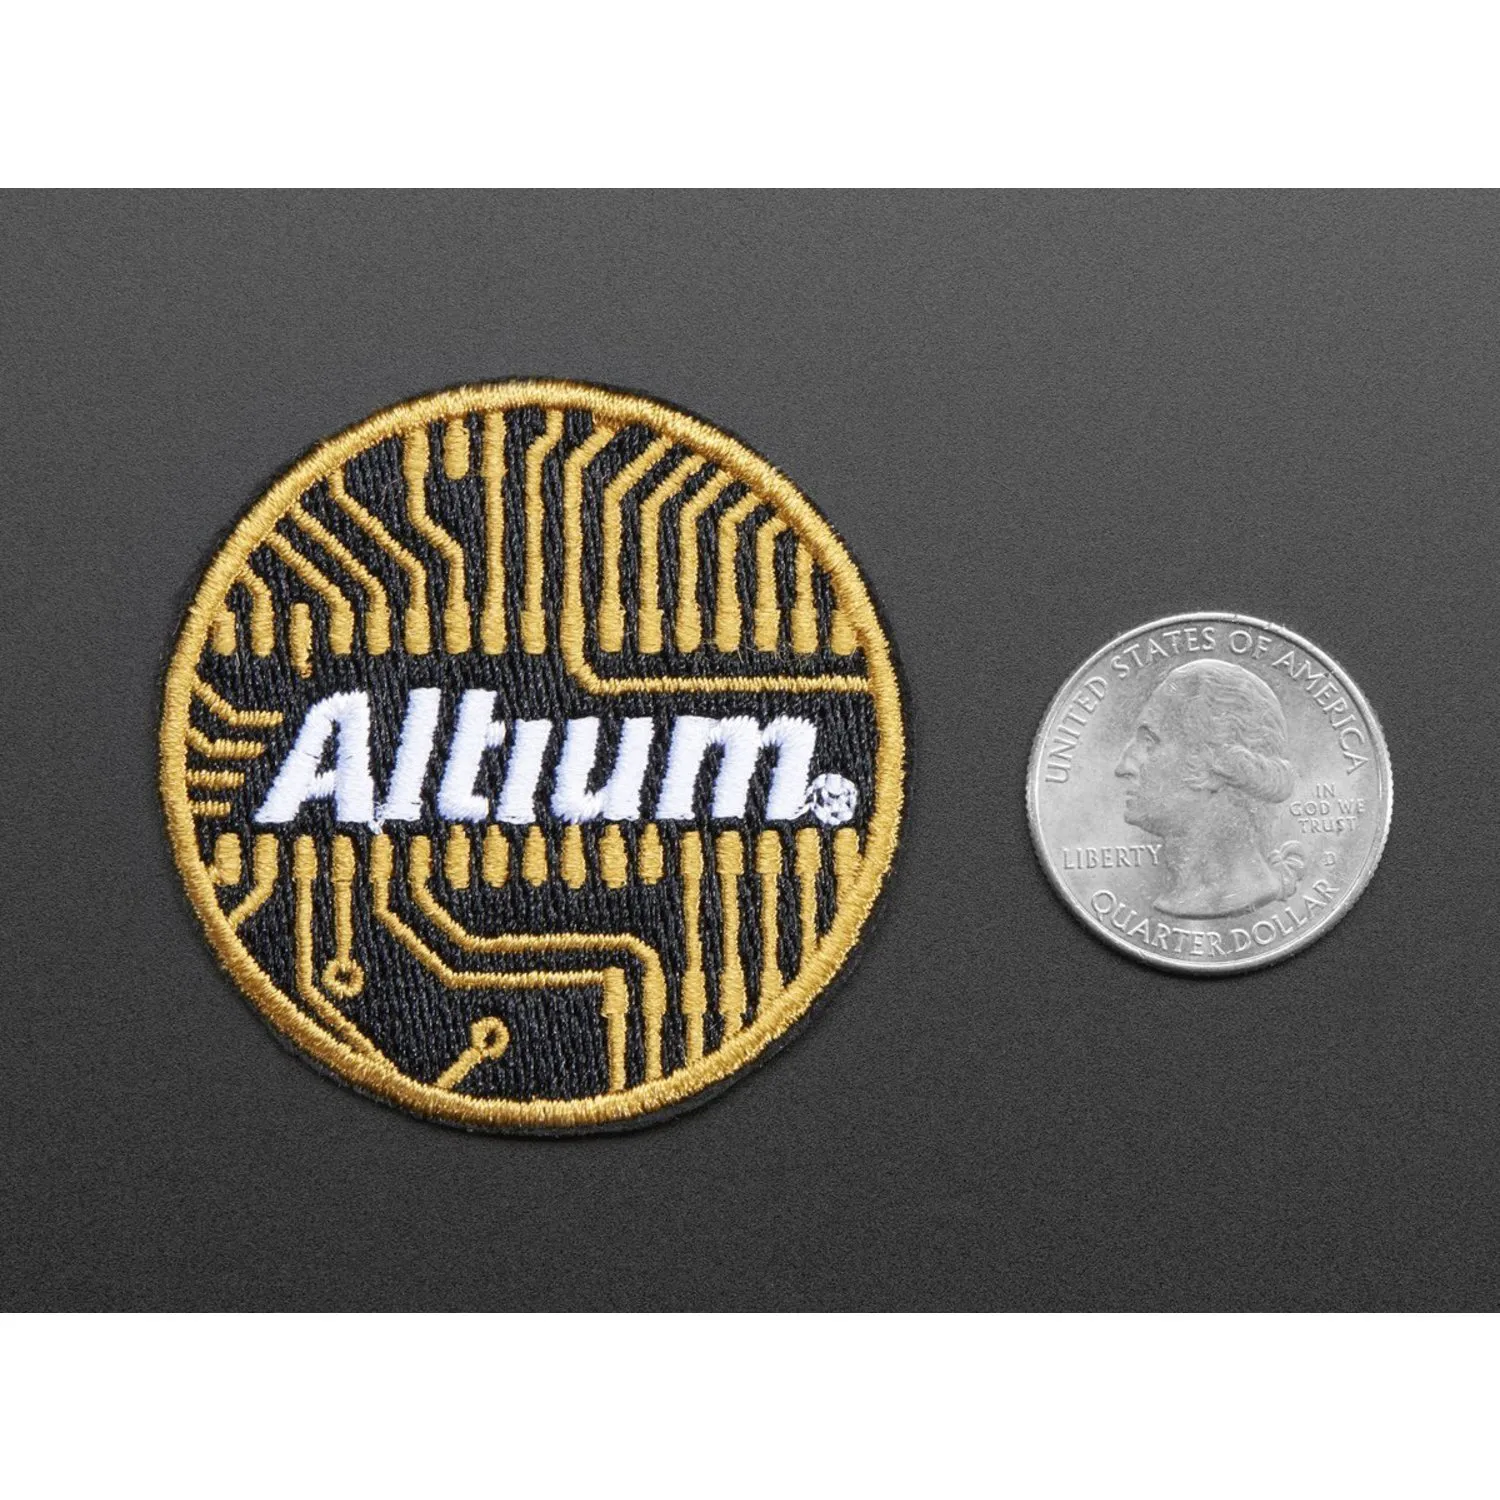 Photo of Altium - Skill badge, iron-on patch